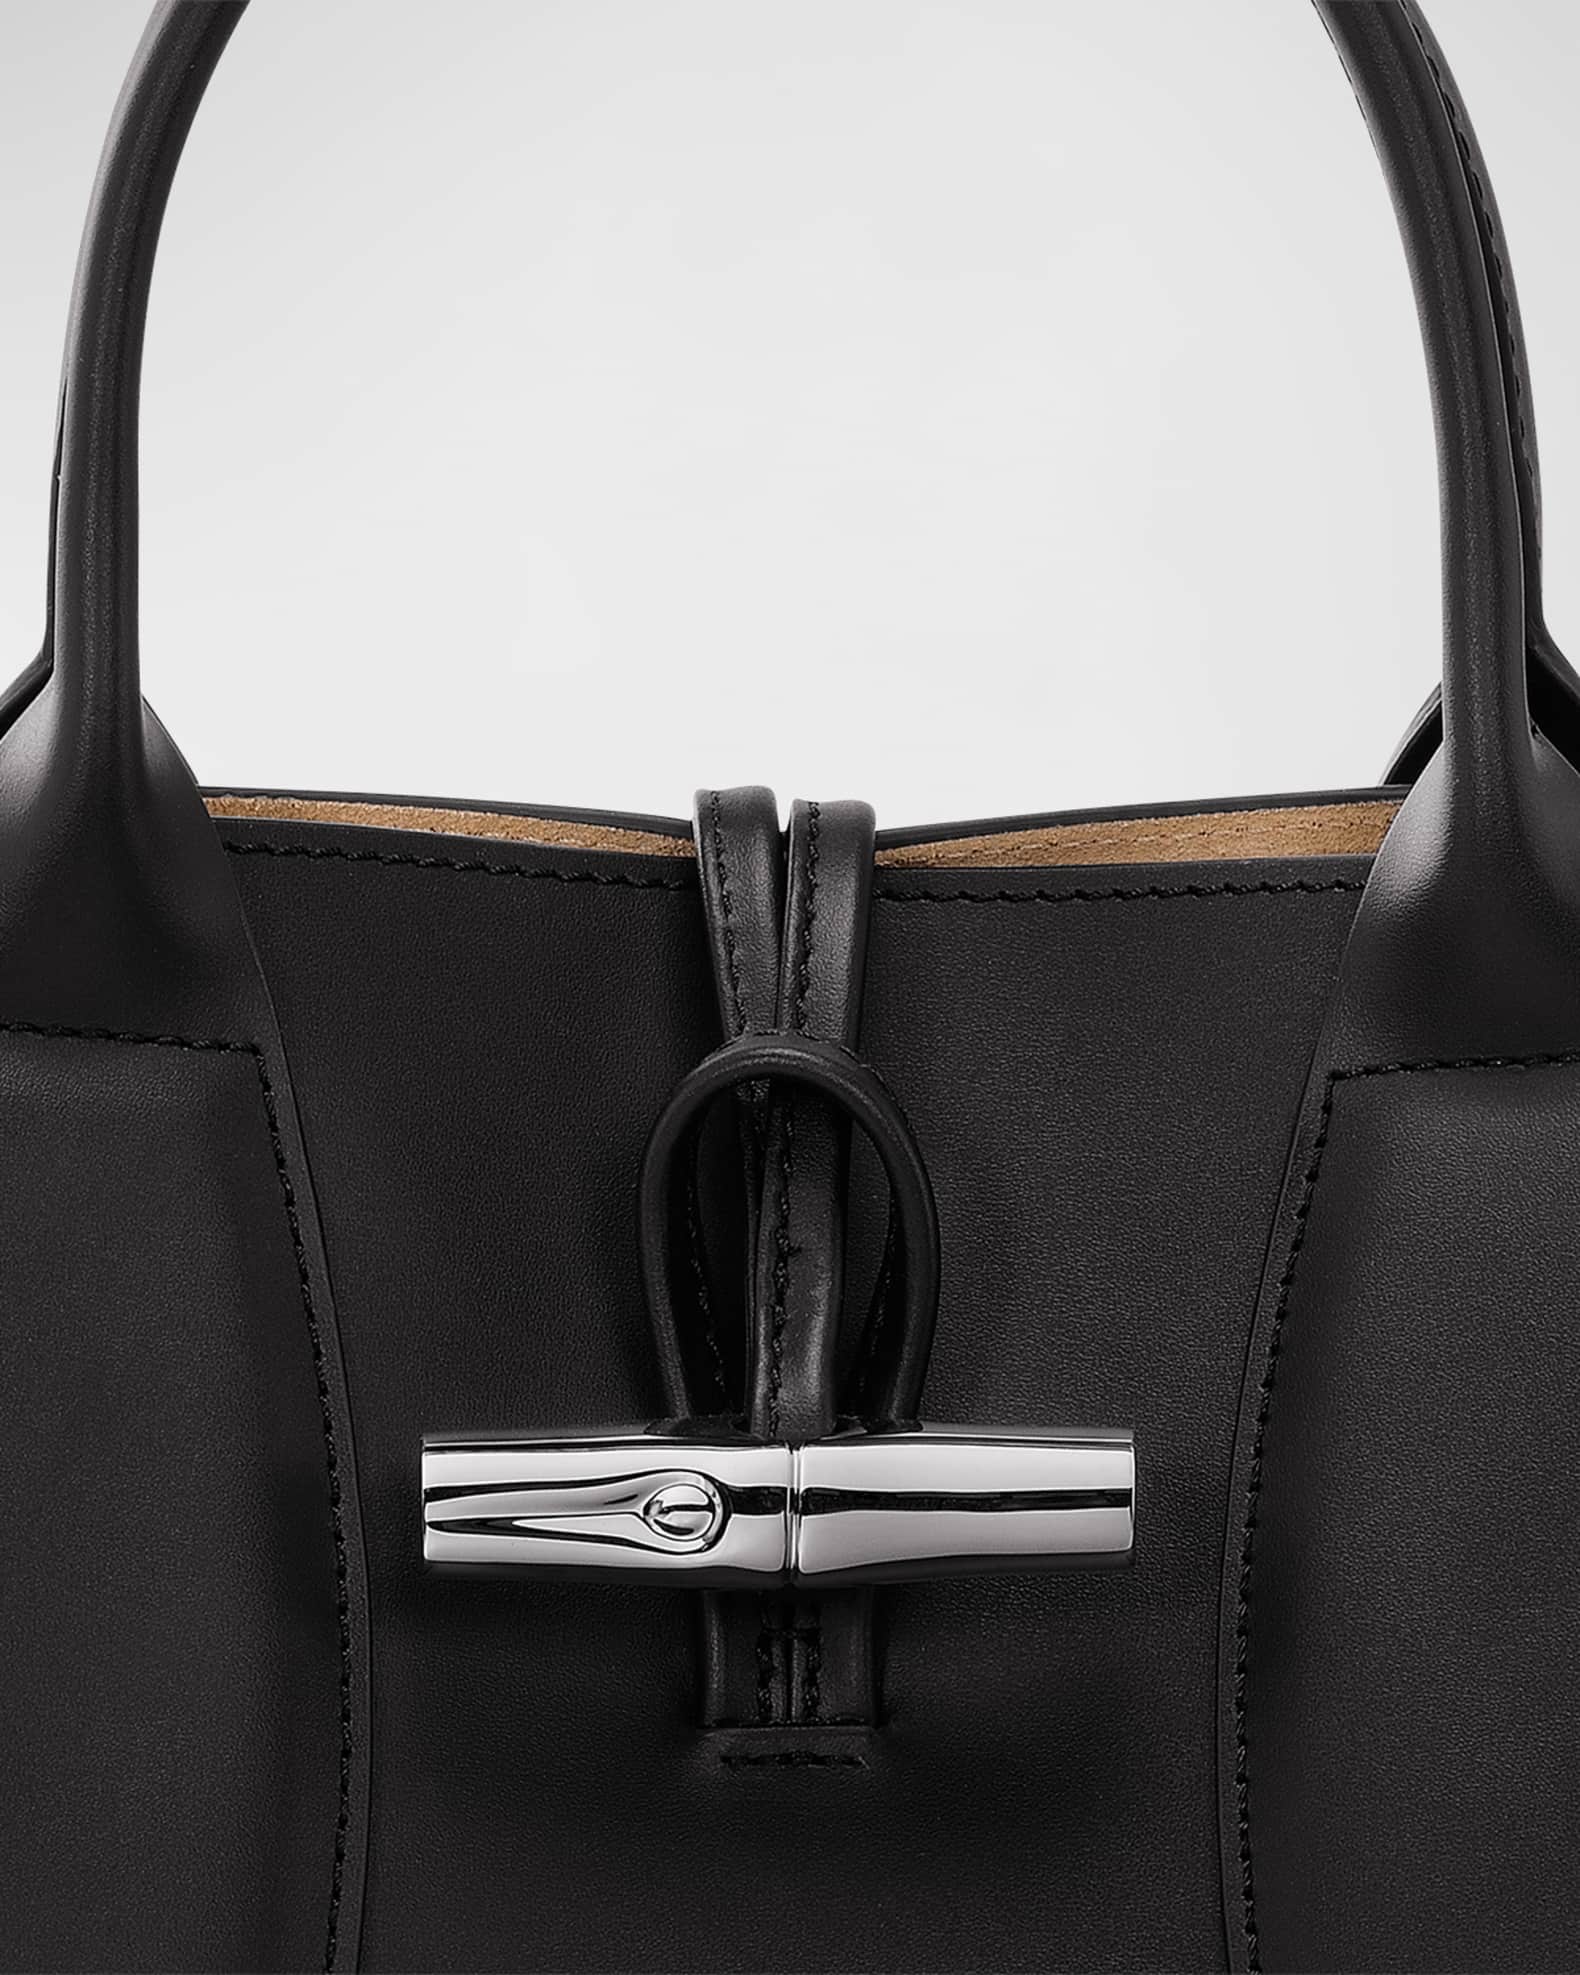 Longchamp Roseau Medium Leather Tote